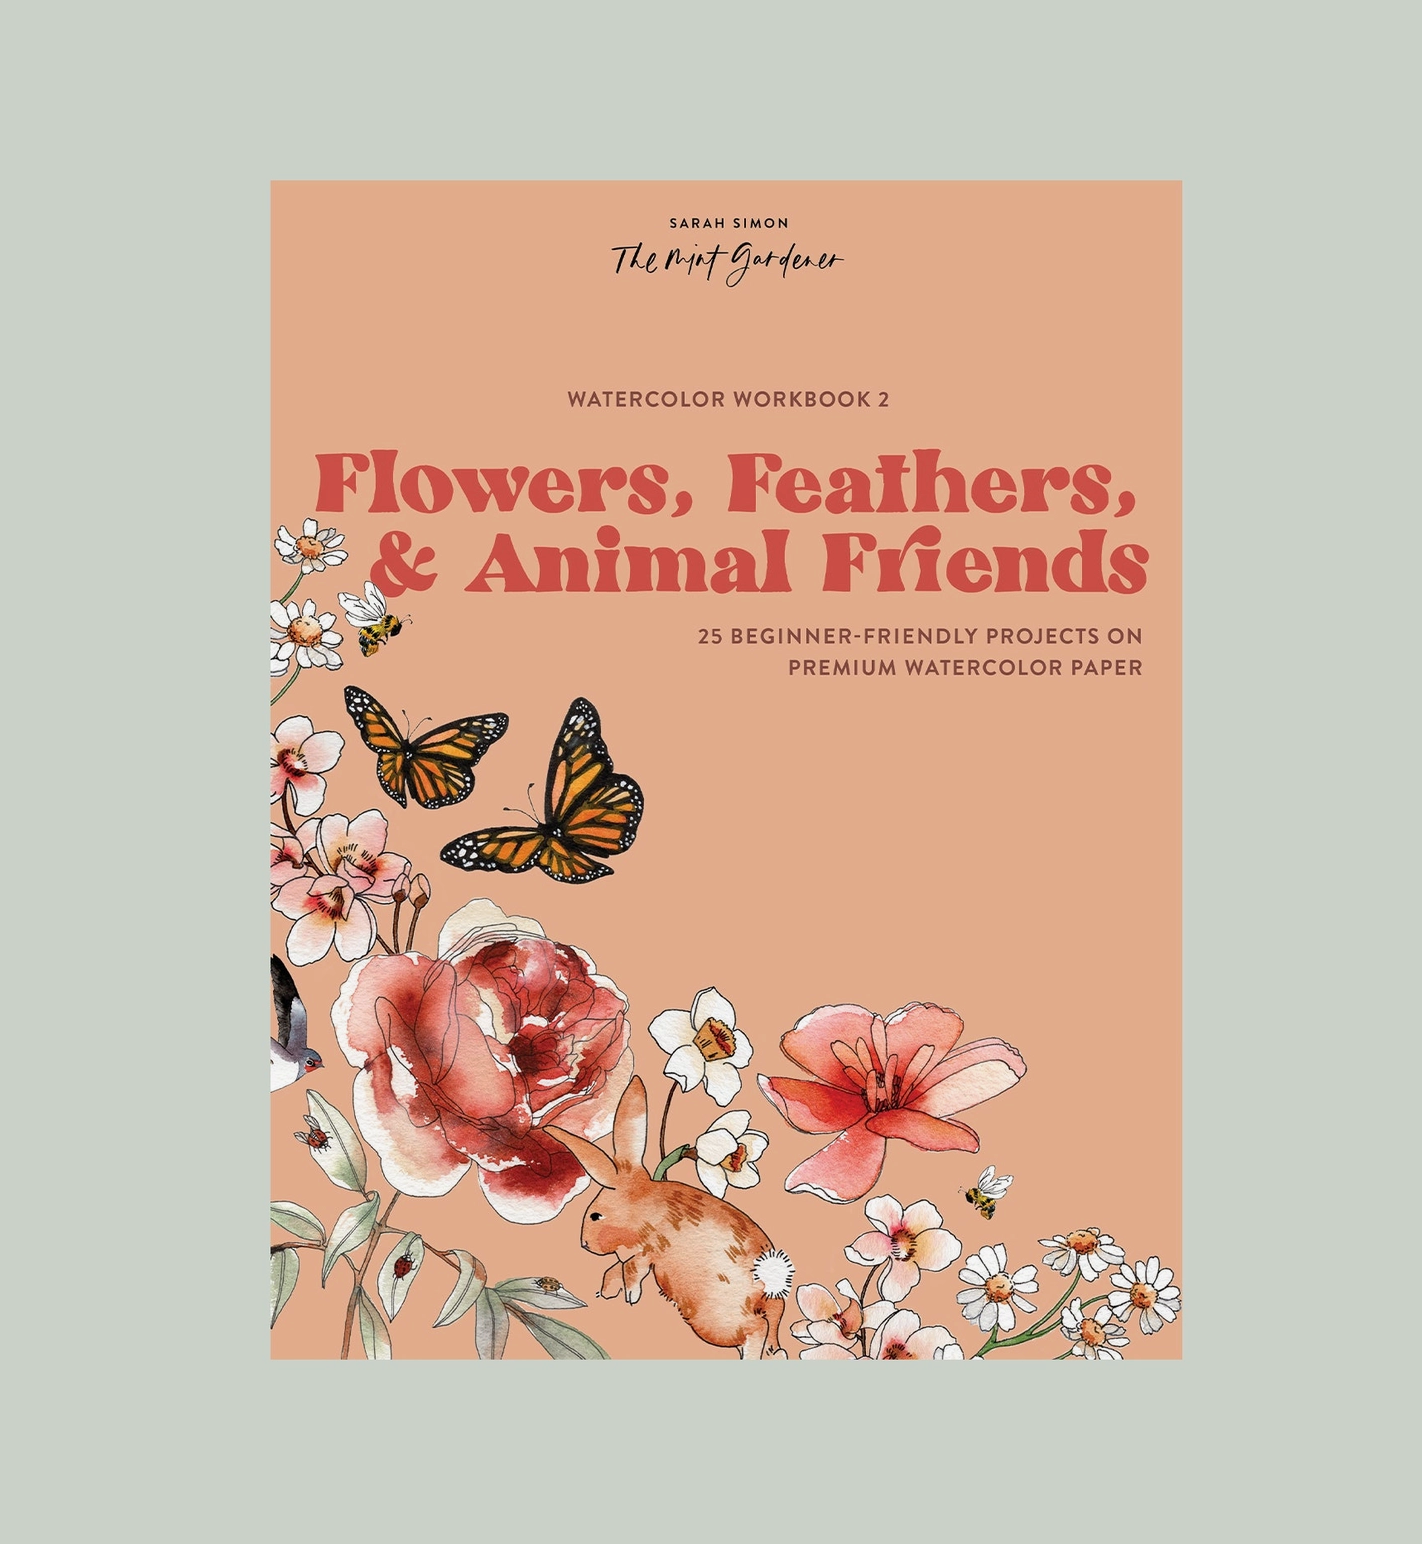 Watercolor Workbook 2: Flowers, Feathers & Animal Friends